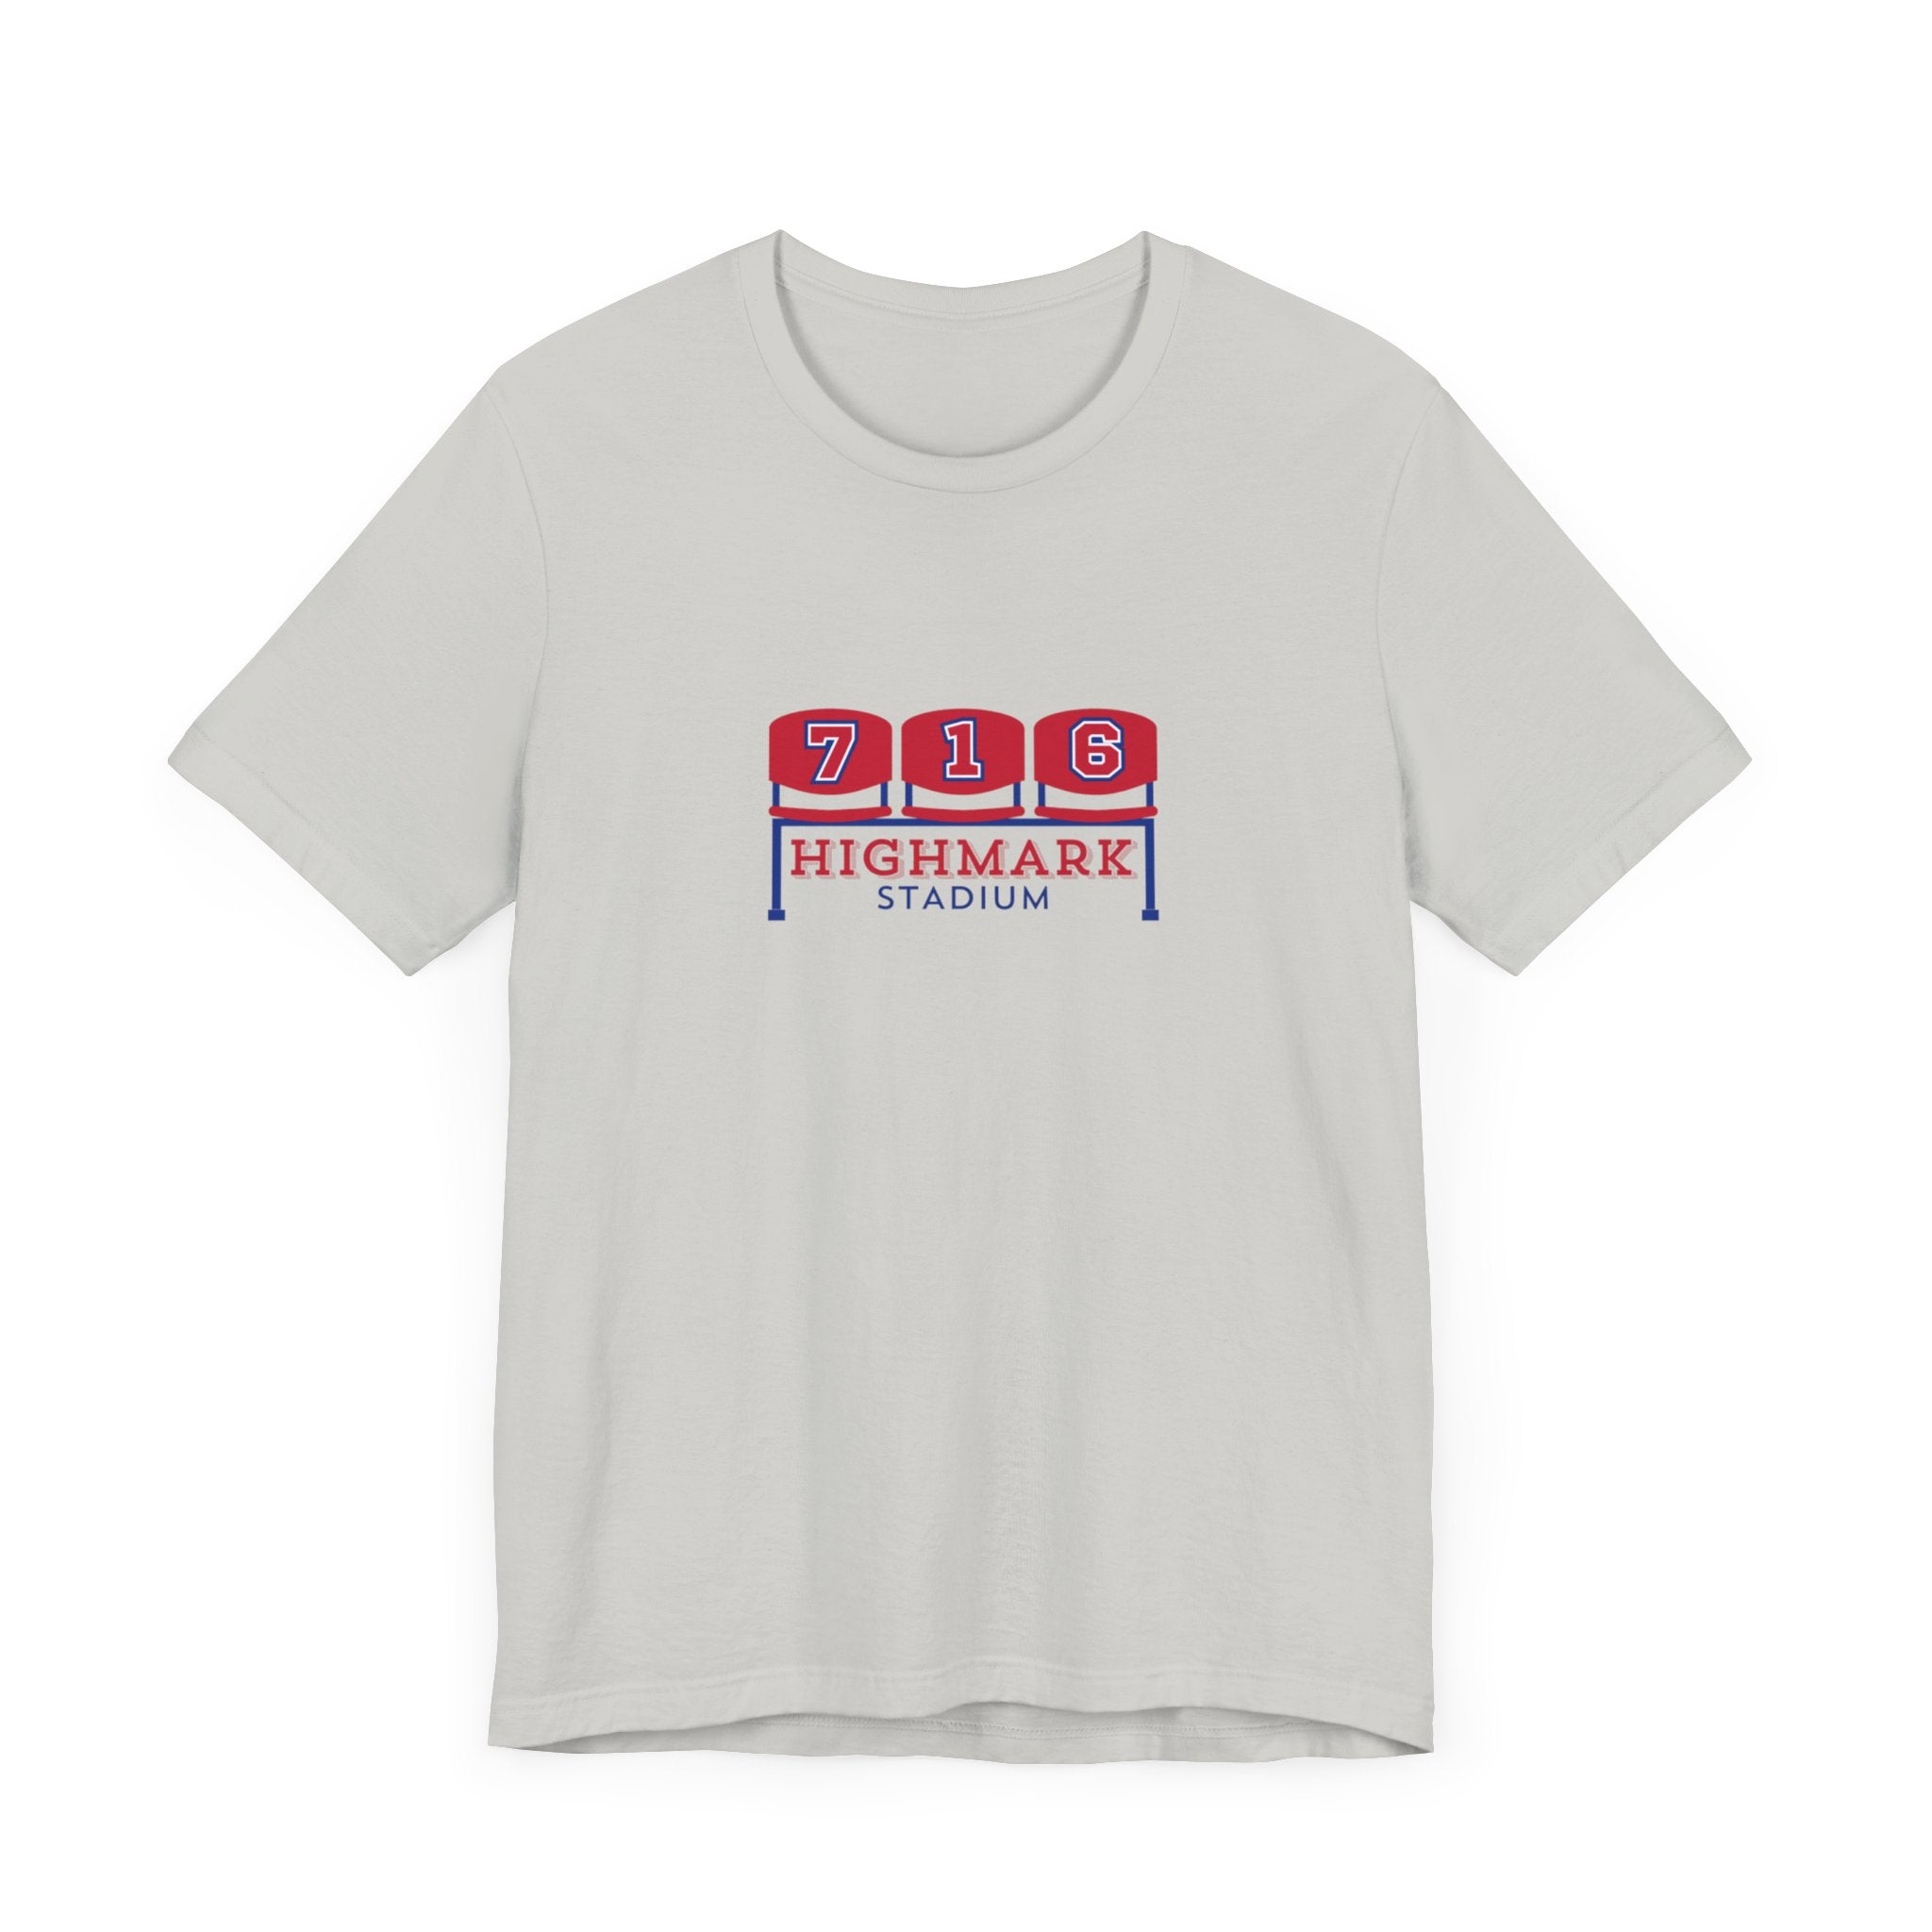 Highmark Stadium T-shirt